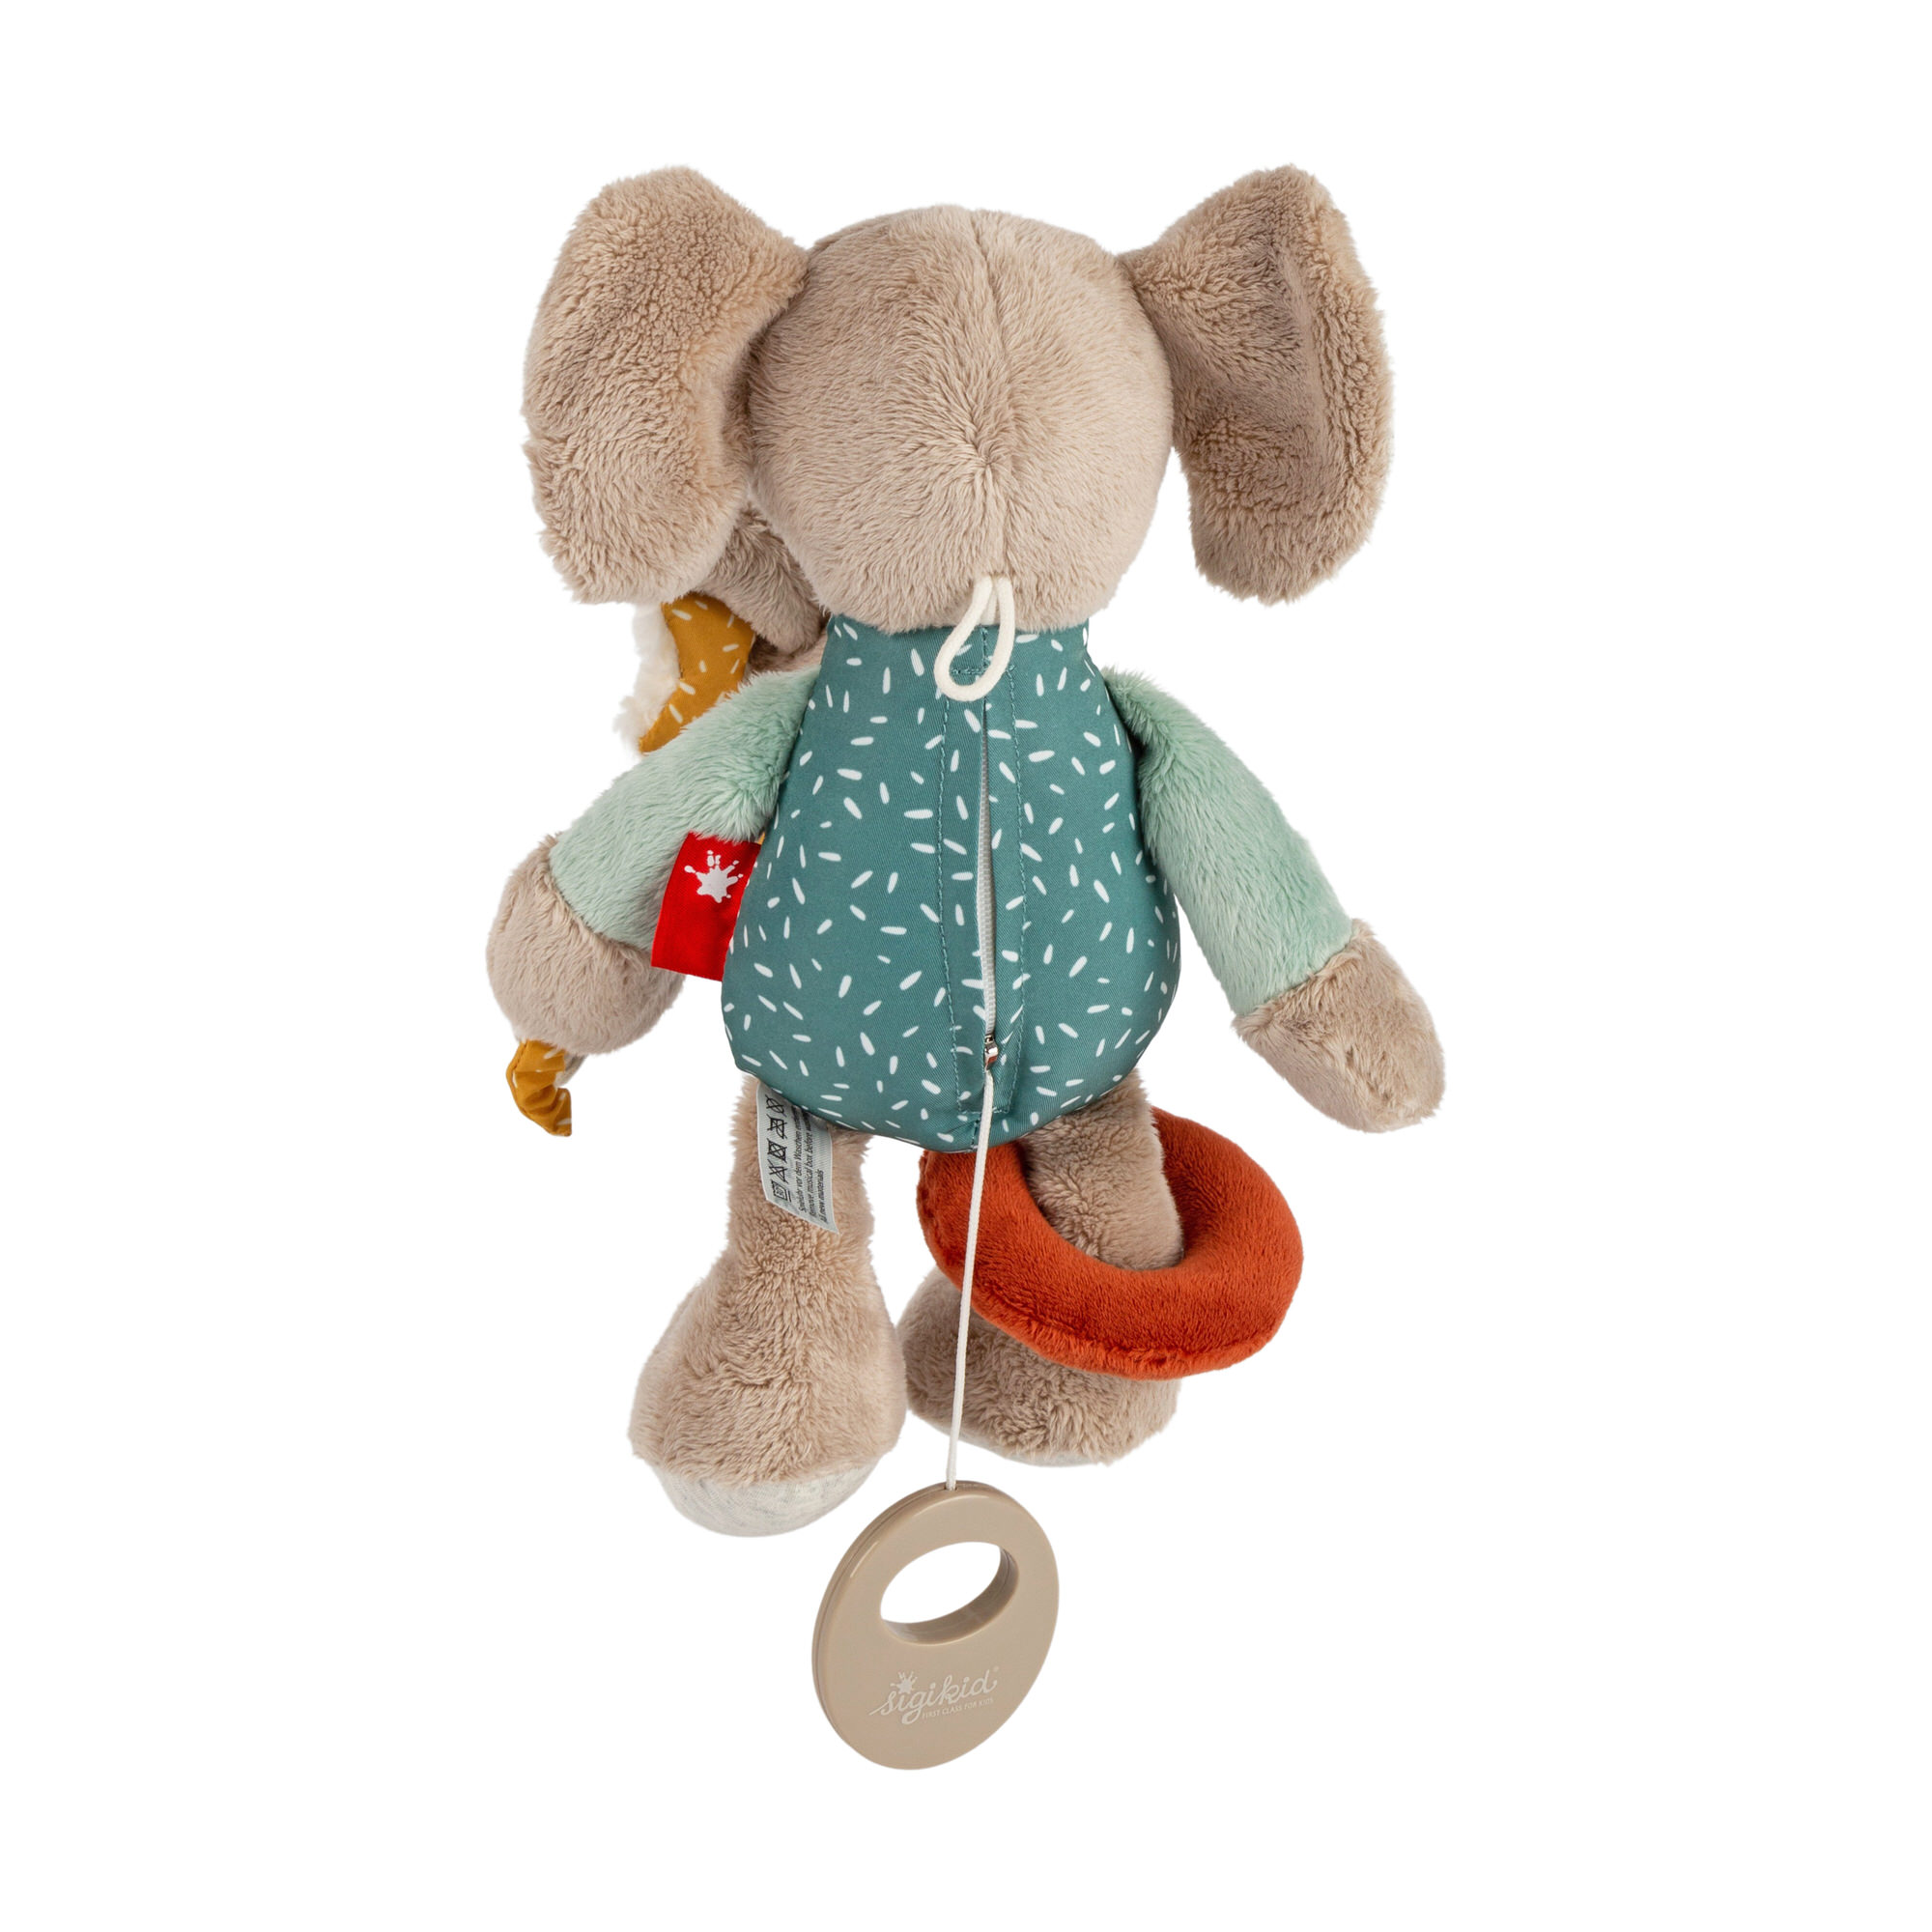 Musical activity soft toy elephant